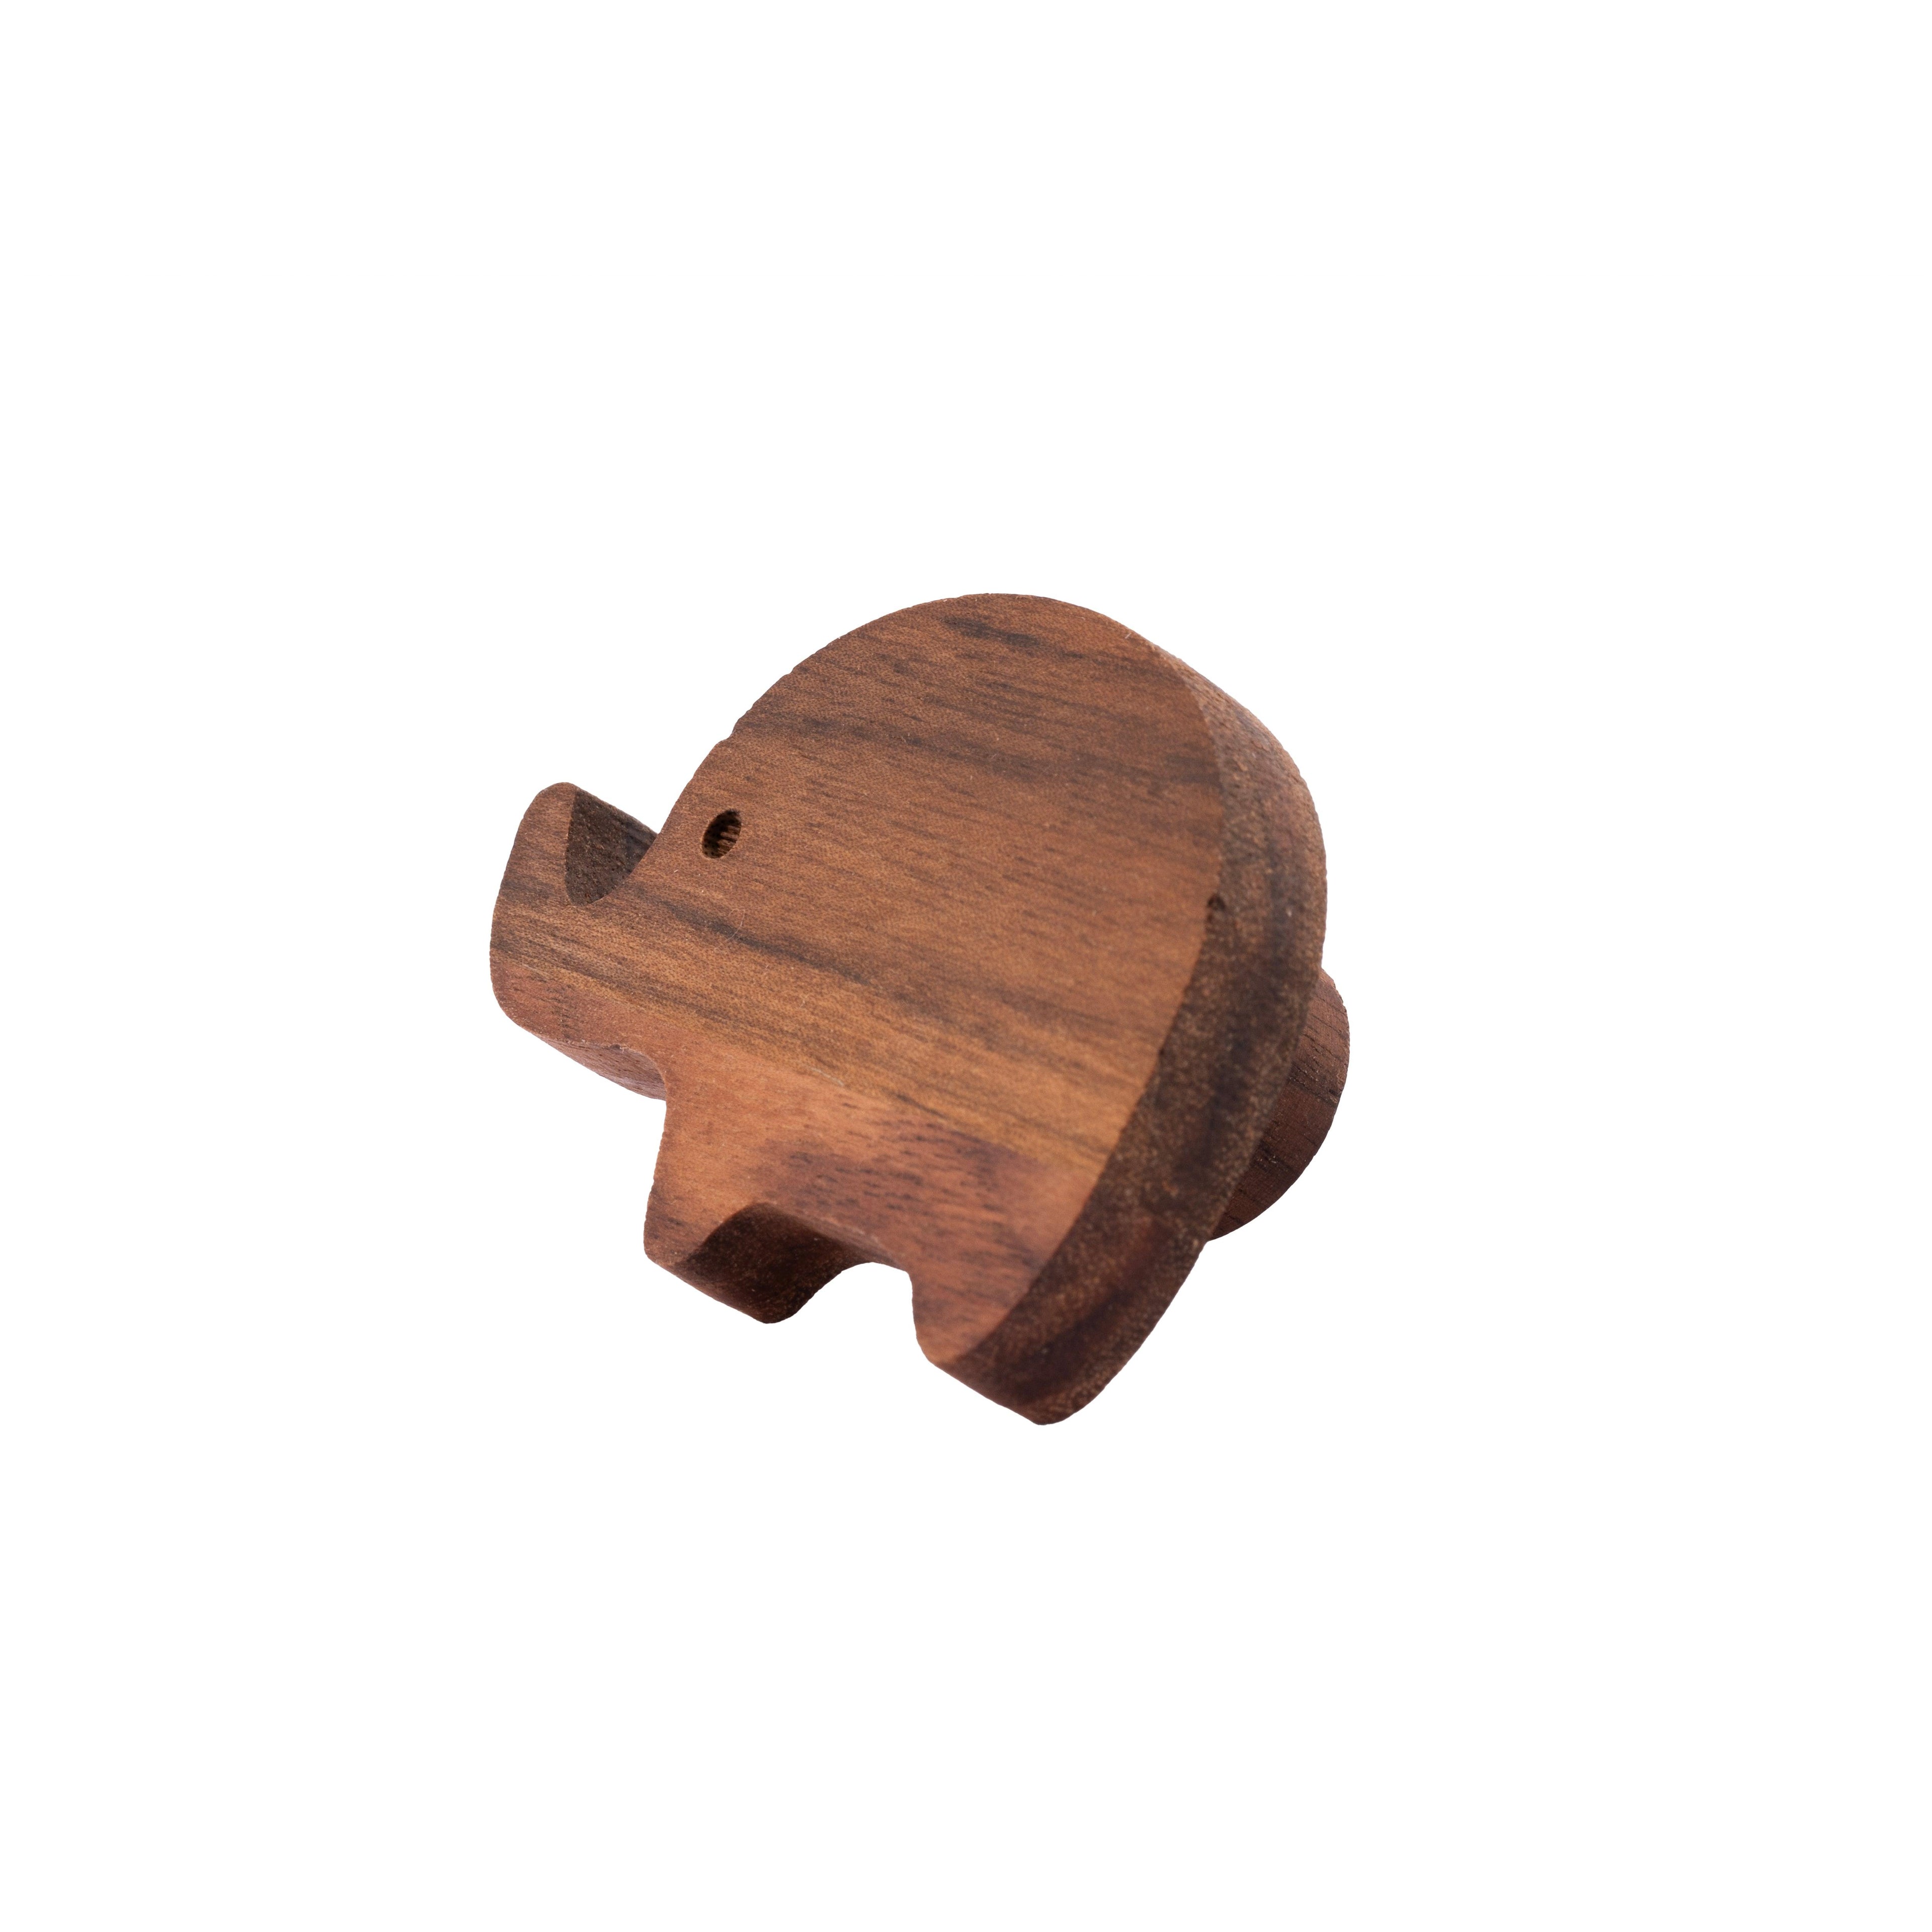 Elephant Wooden Knob Knob 50mm / Walnut / Wood - M A N T A R A